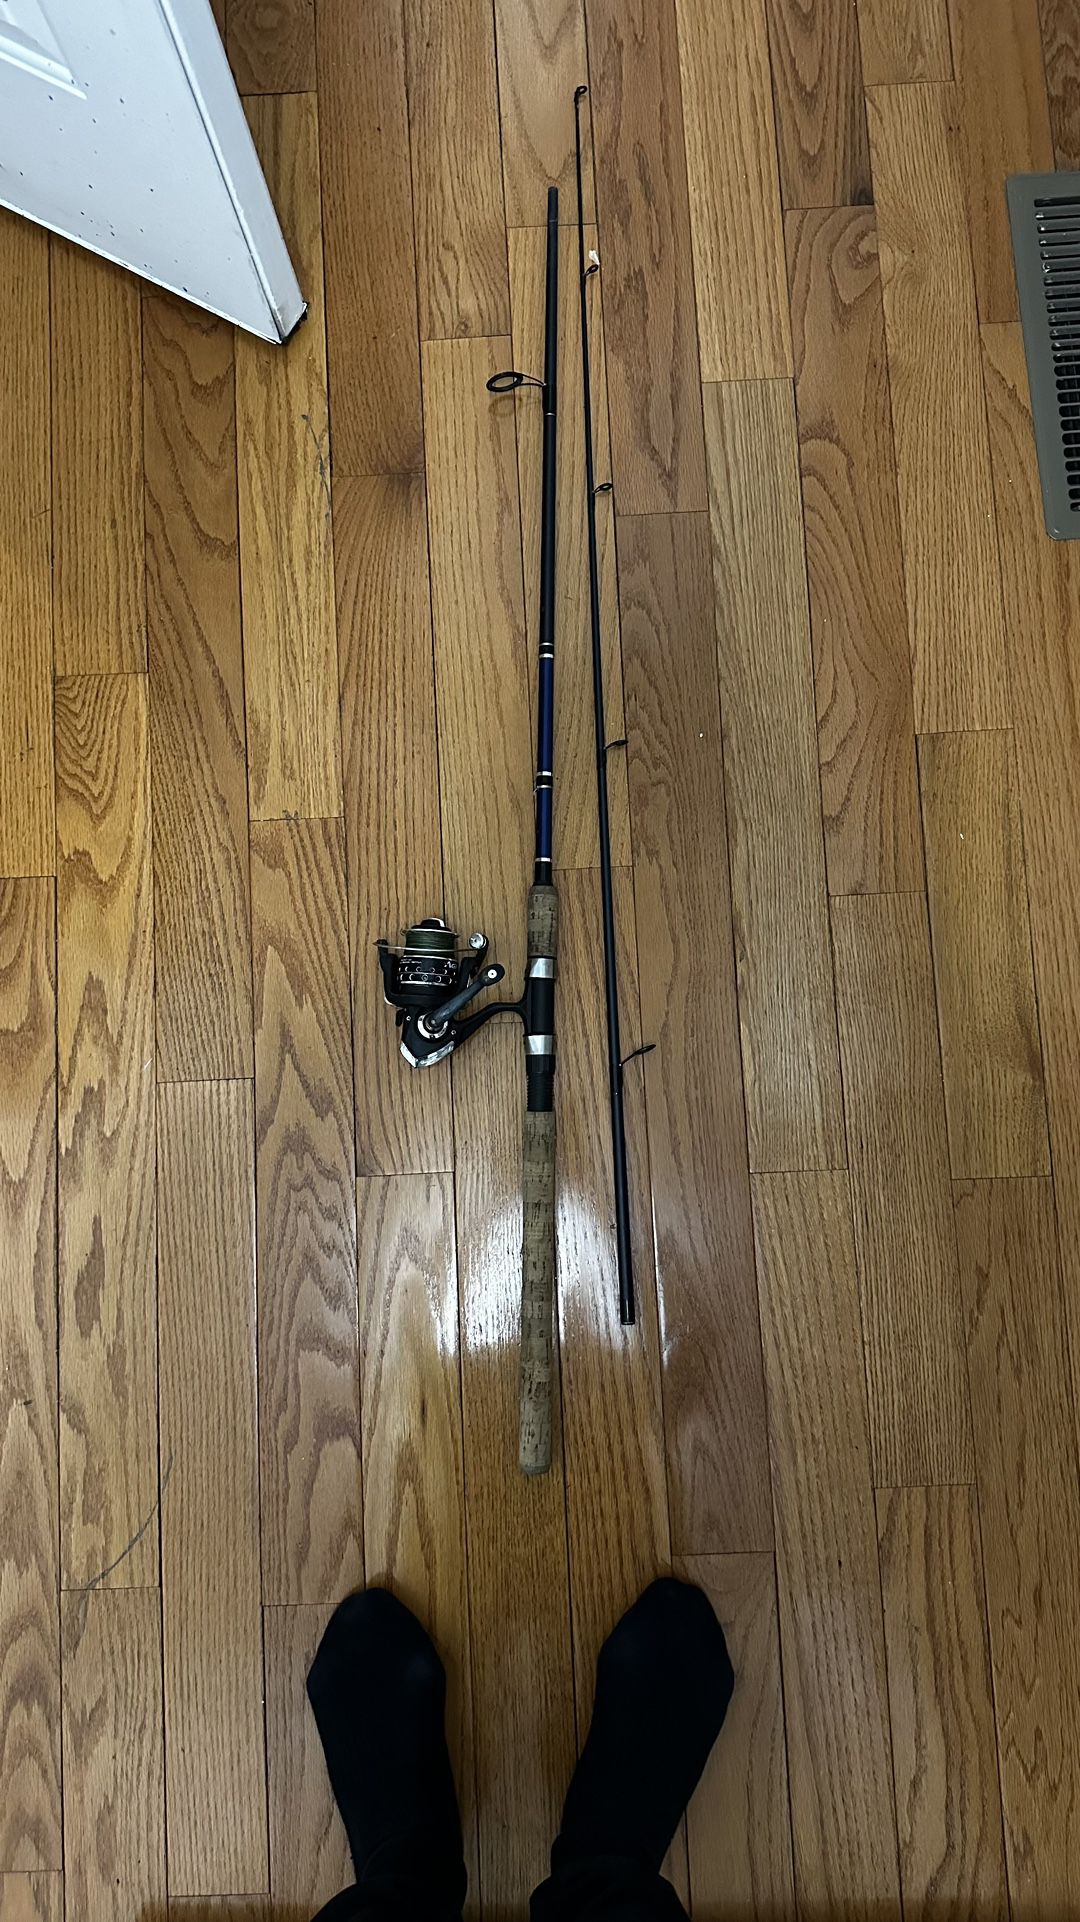 Daiwa Fishing Rod And Reel